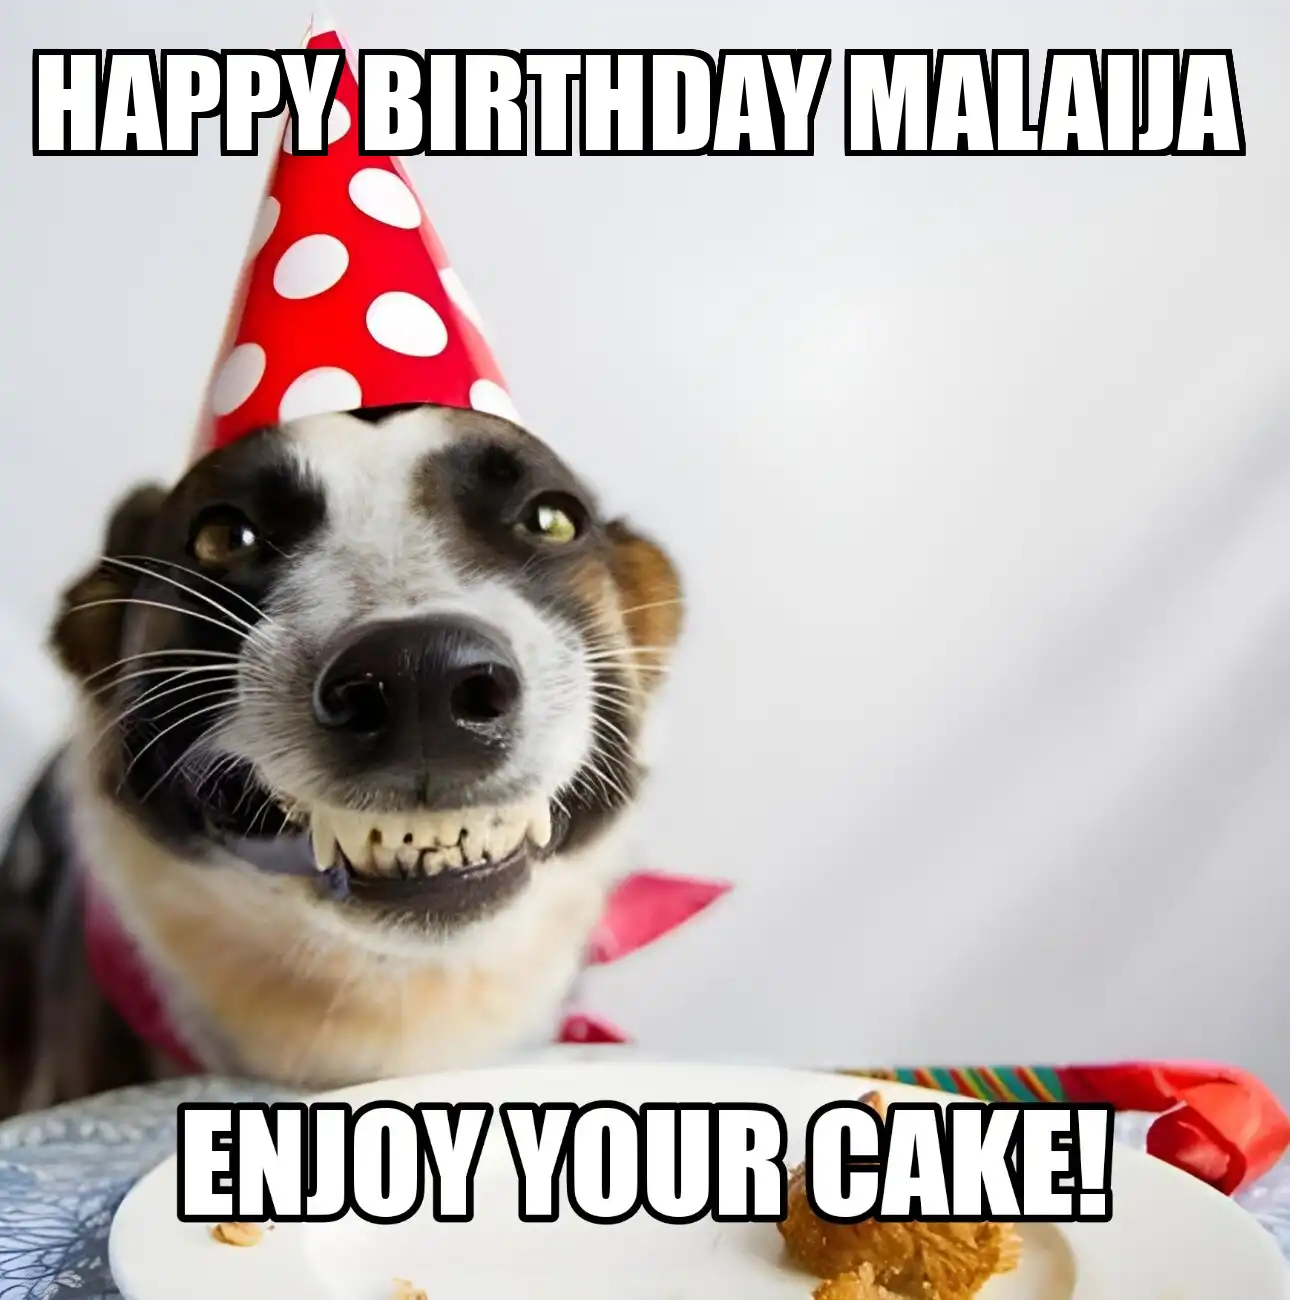 Happy Birthday Malaija Enjoy Your Cake Dog Meme